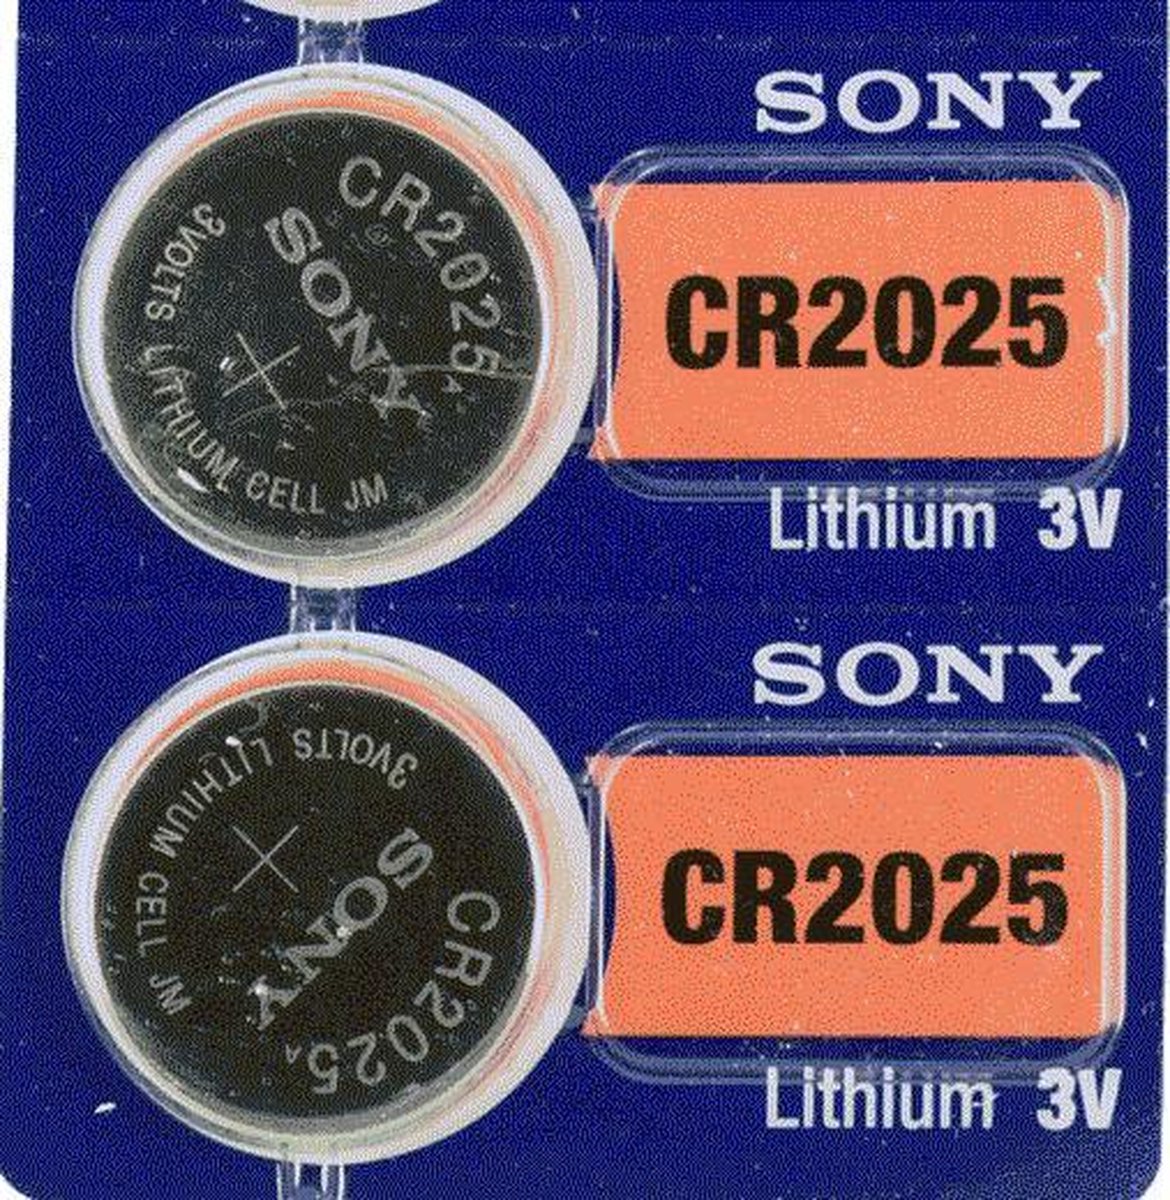 SONY / MURATA CR2025 Lithium knoopcel batterij 2 (twee) stuks